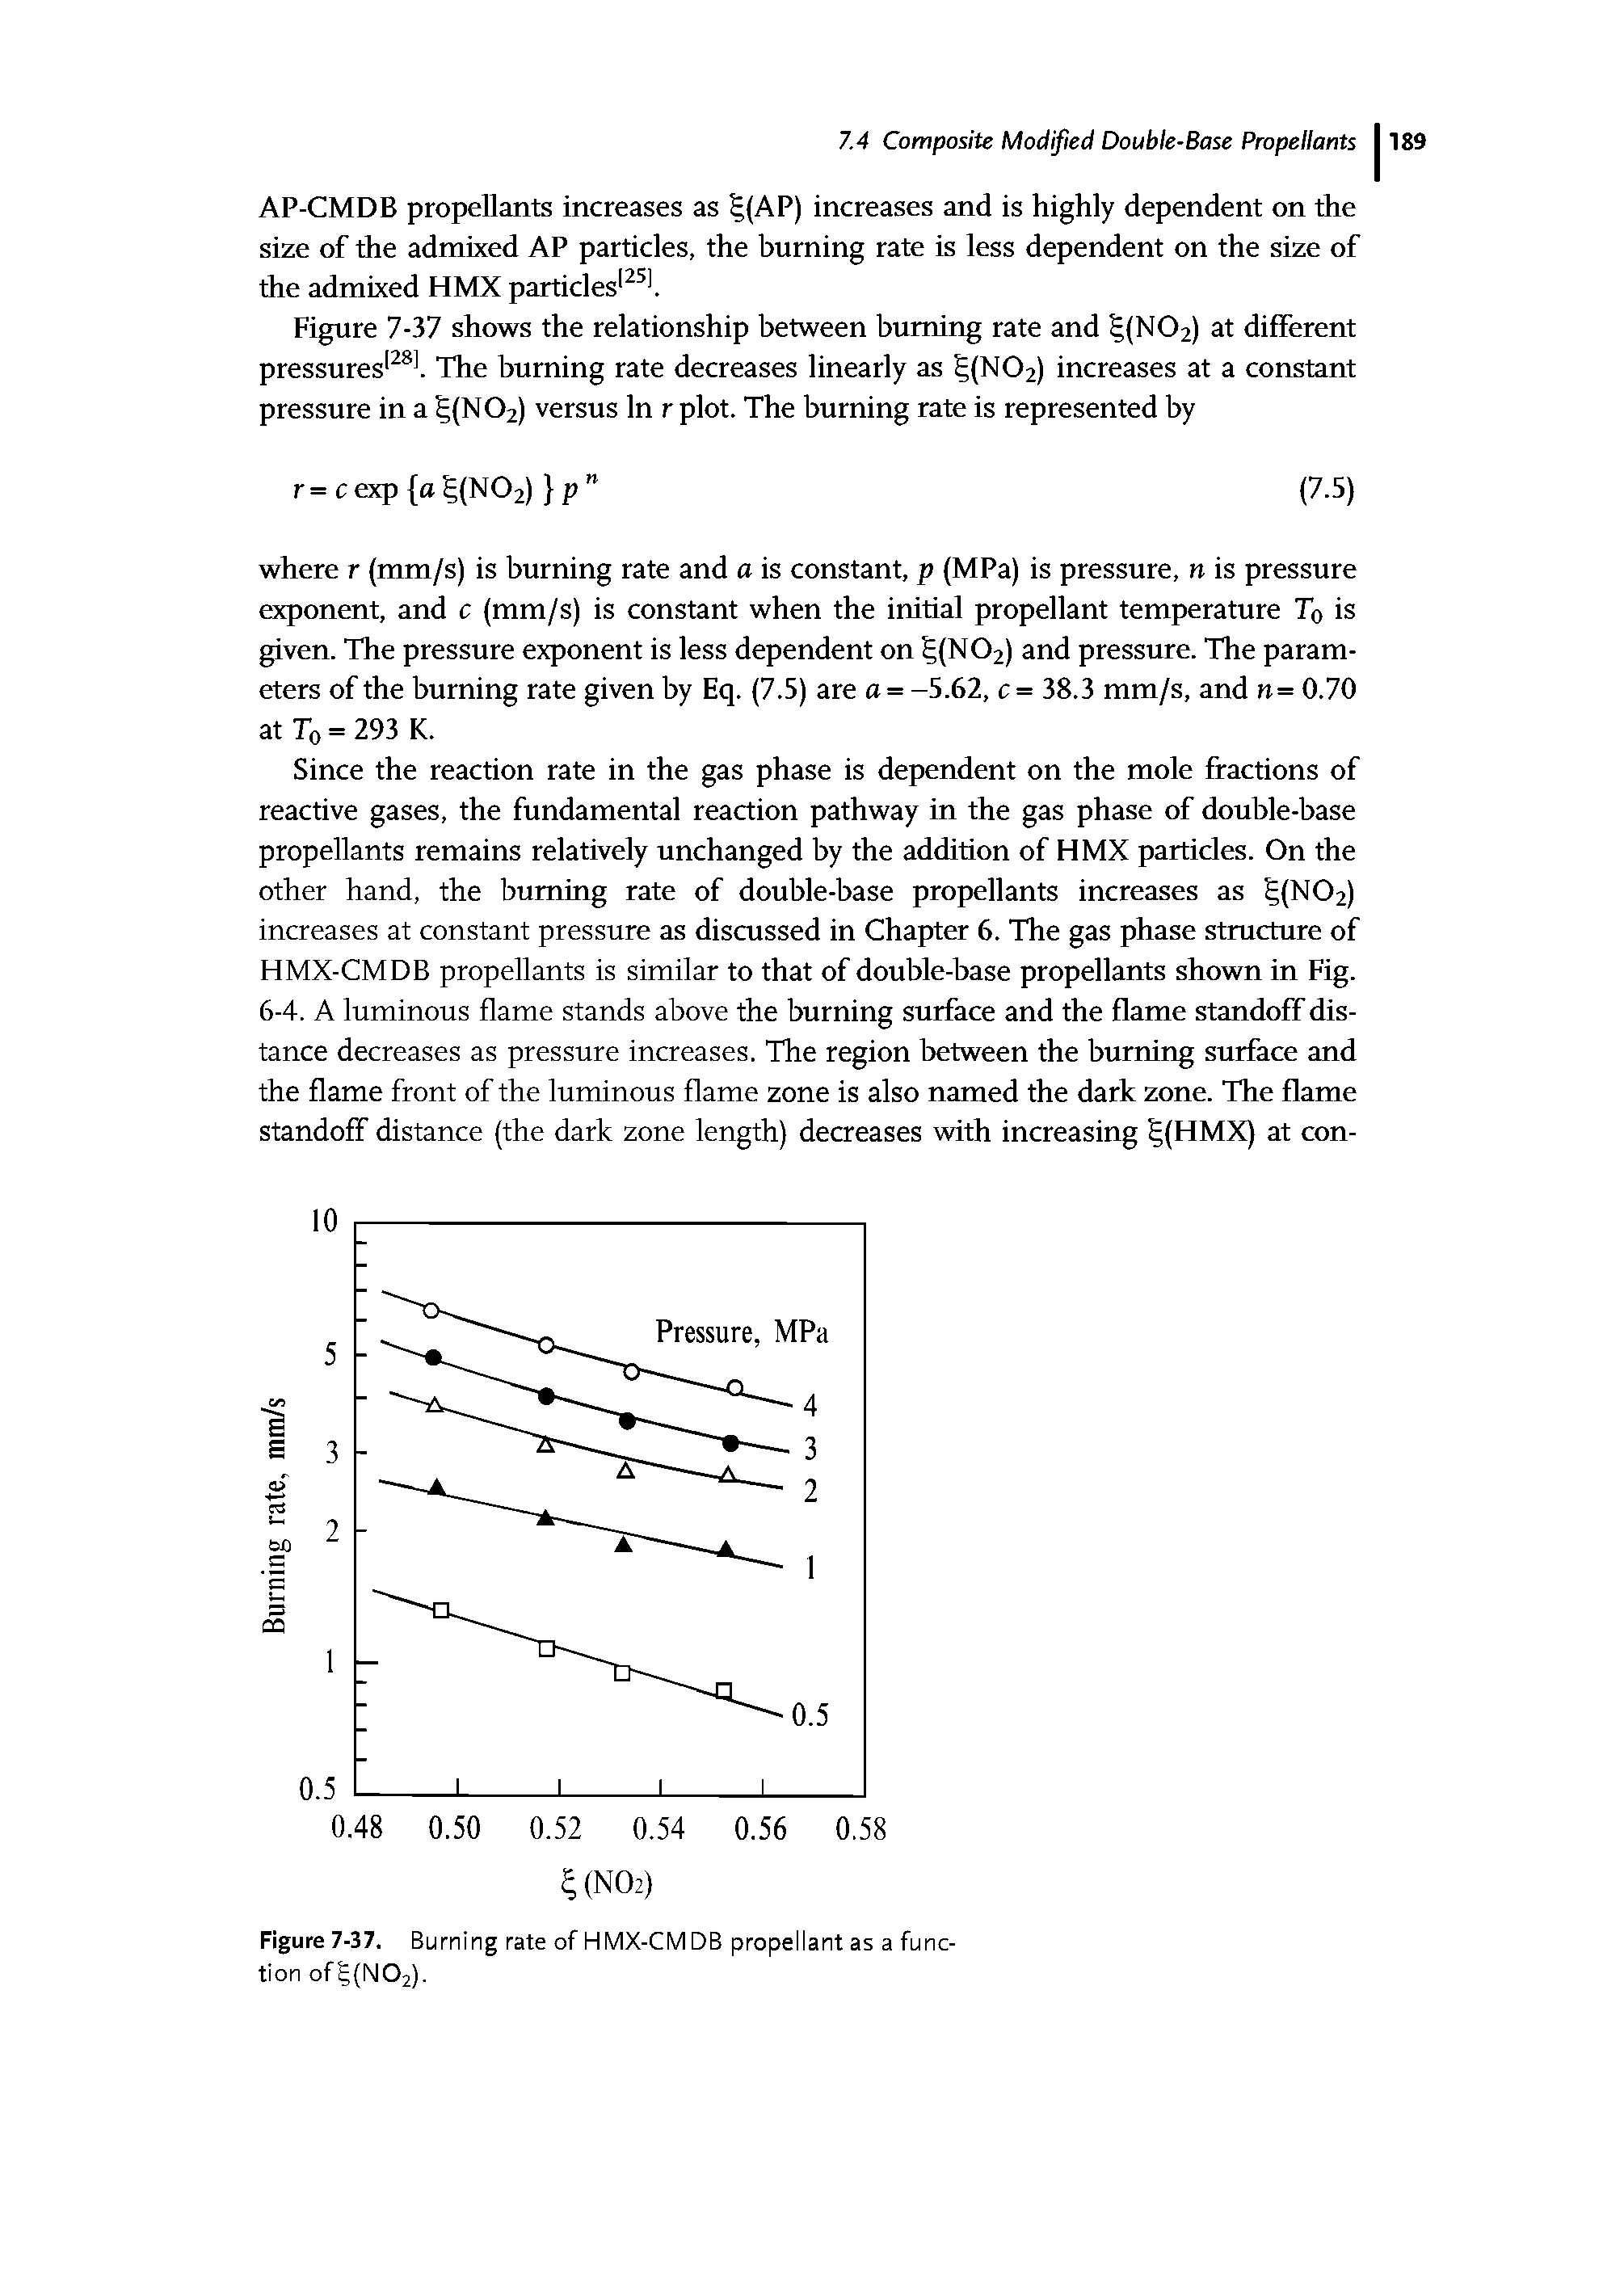 Figure 7-37. Burning rate of HMX-CMDB propellant as a function of (N02).